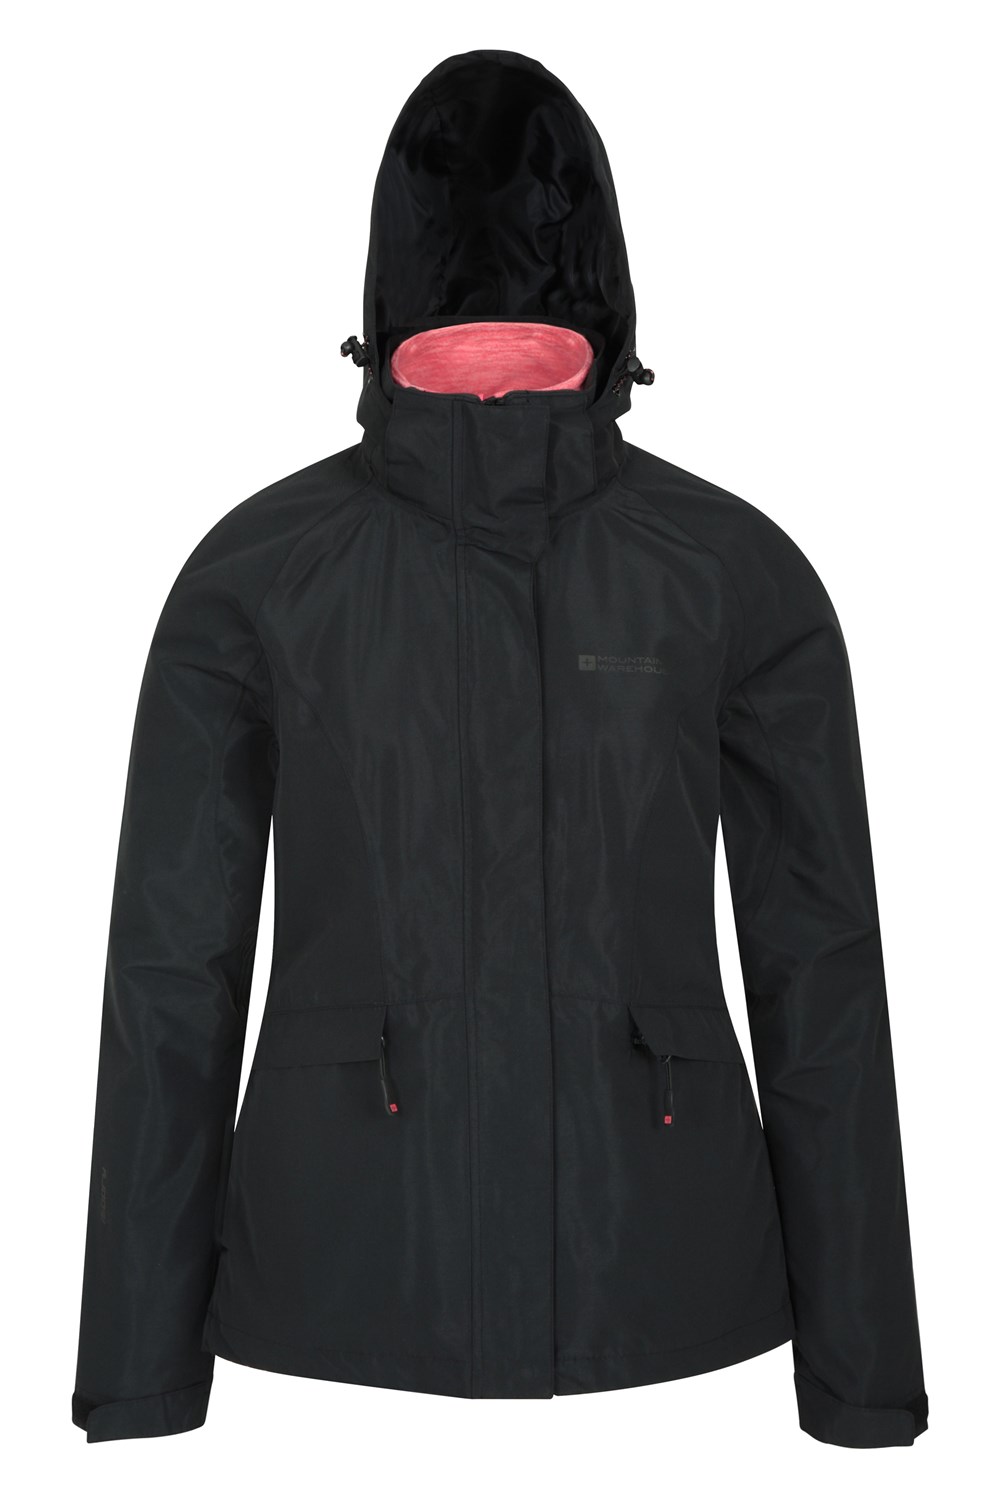 Mountain Warehouse Womens 3 in 1 Waterproof Jacket Coat Detachable ...